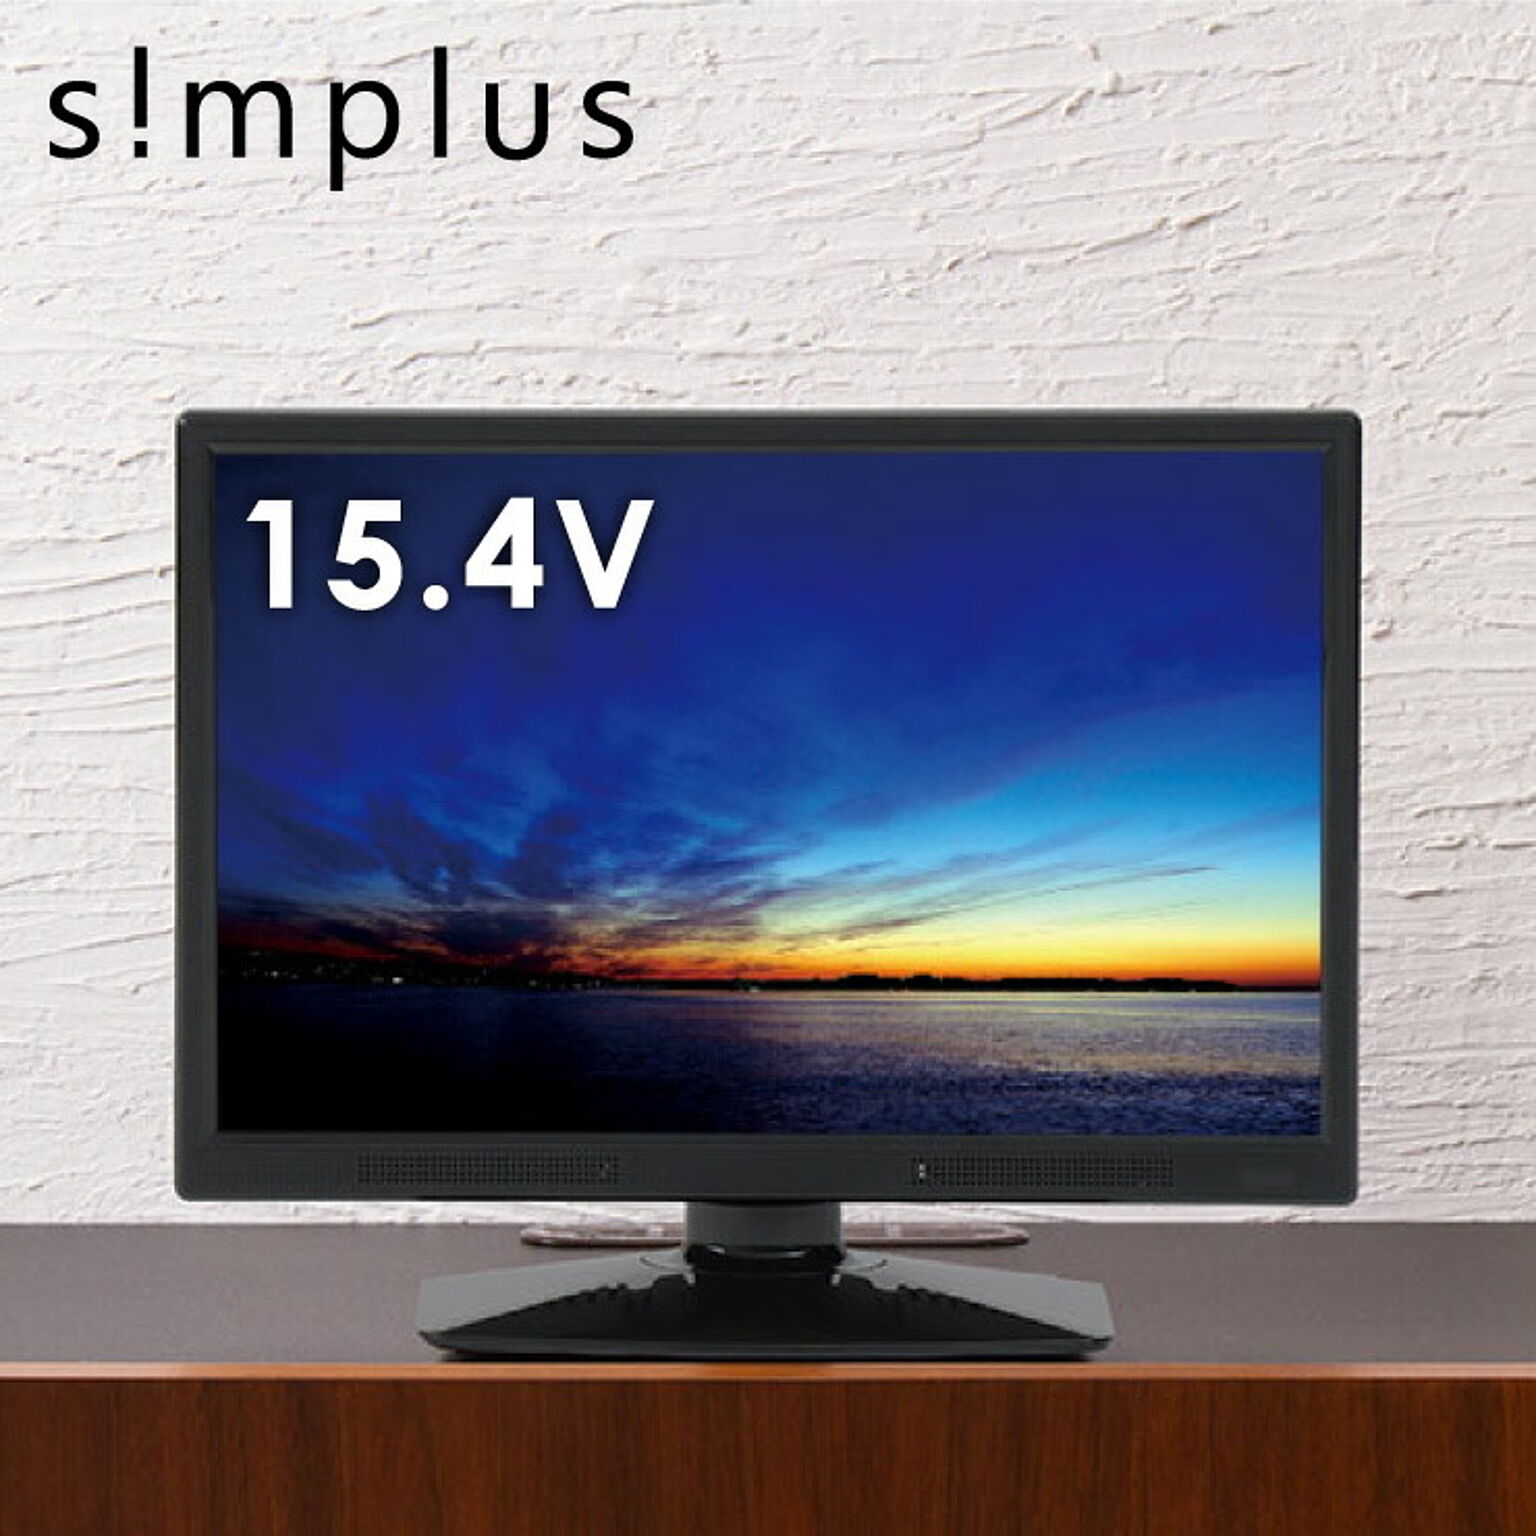 simplus テレビ 15.4インチ 液晶テレビ SP-154TV02 フルセグ対応 15.4V 15.4型 LED液晶テレビ 1波 シンプラス 15.4V型 地上デジタル USB マルチメディア